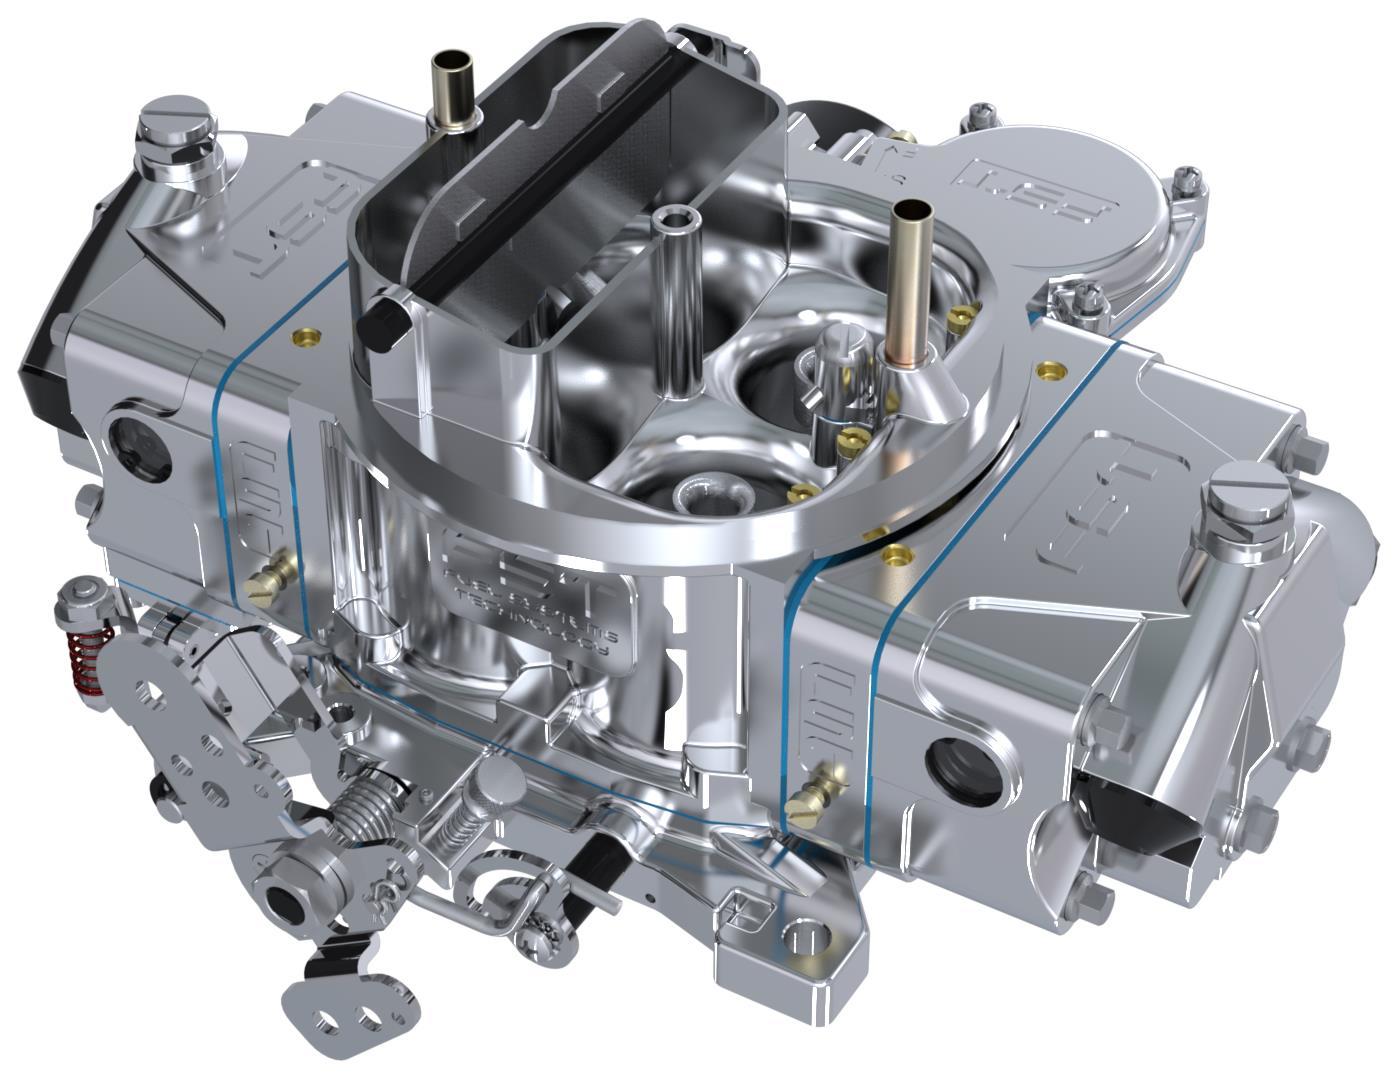 FST Carburetor 41750 Carburetor, RT, 4-Barrel, 750 CFM, Square Bore, Electric Choke, Vacuum Secondary, Dual Inlet, Polished, Each